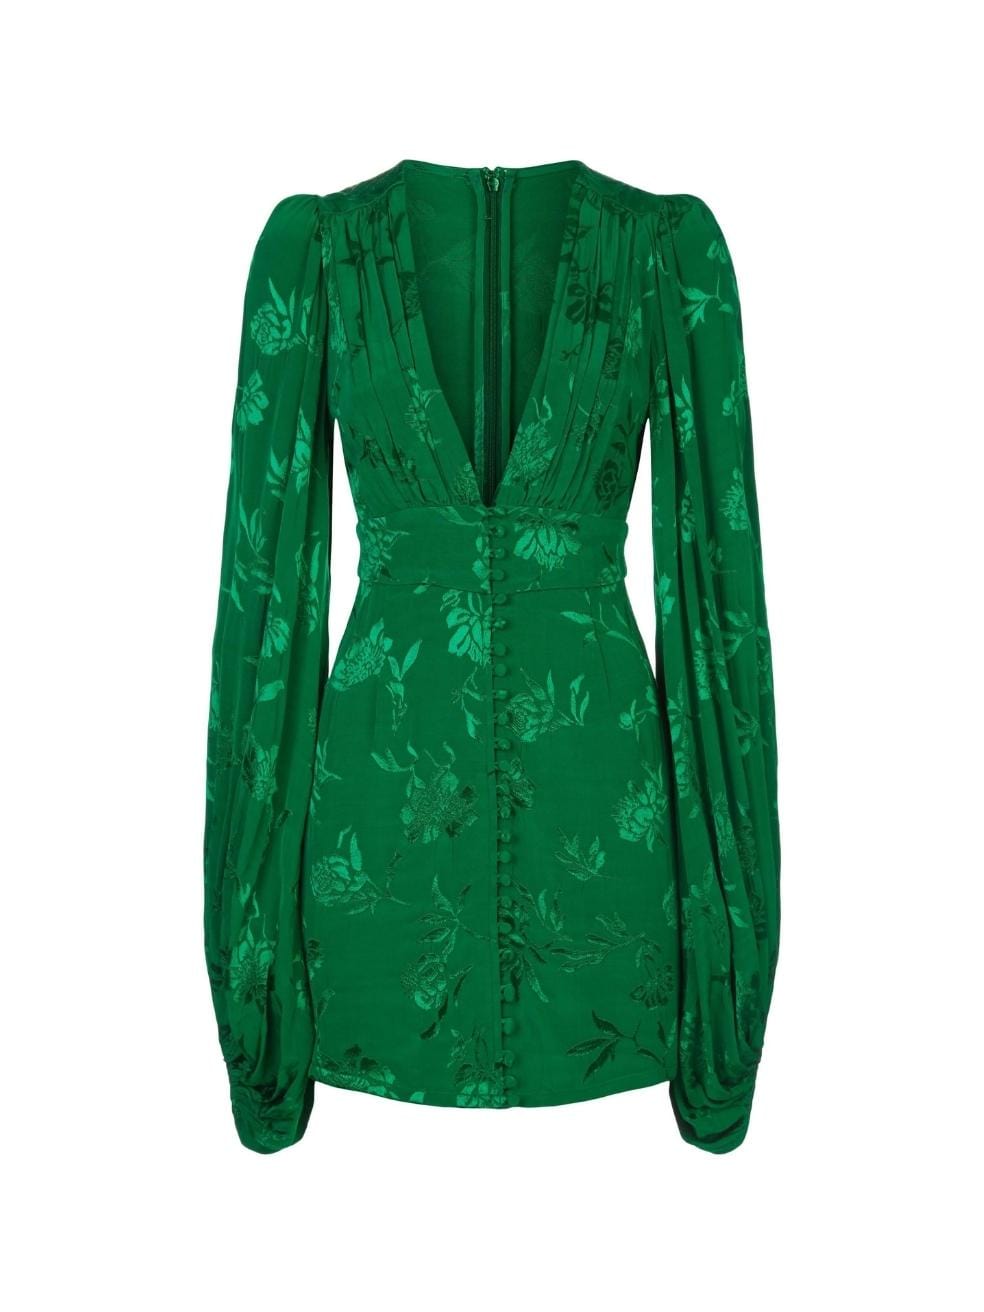 ISABELLA DRESS in emerald green